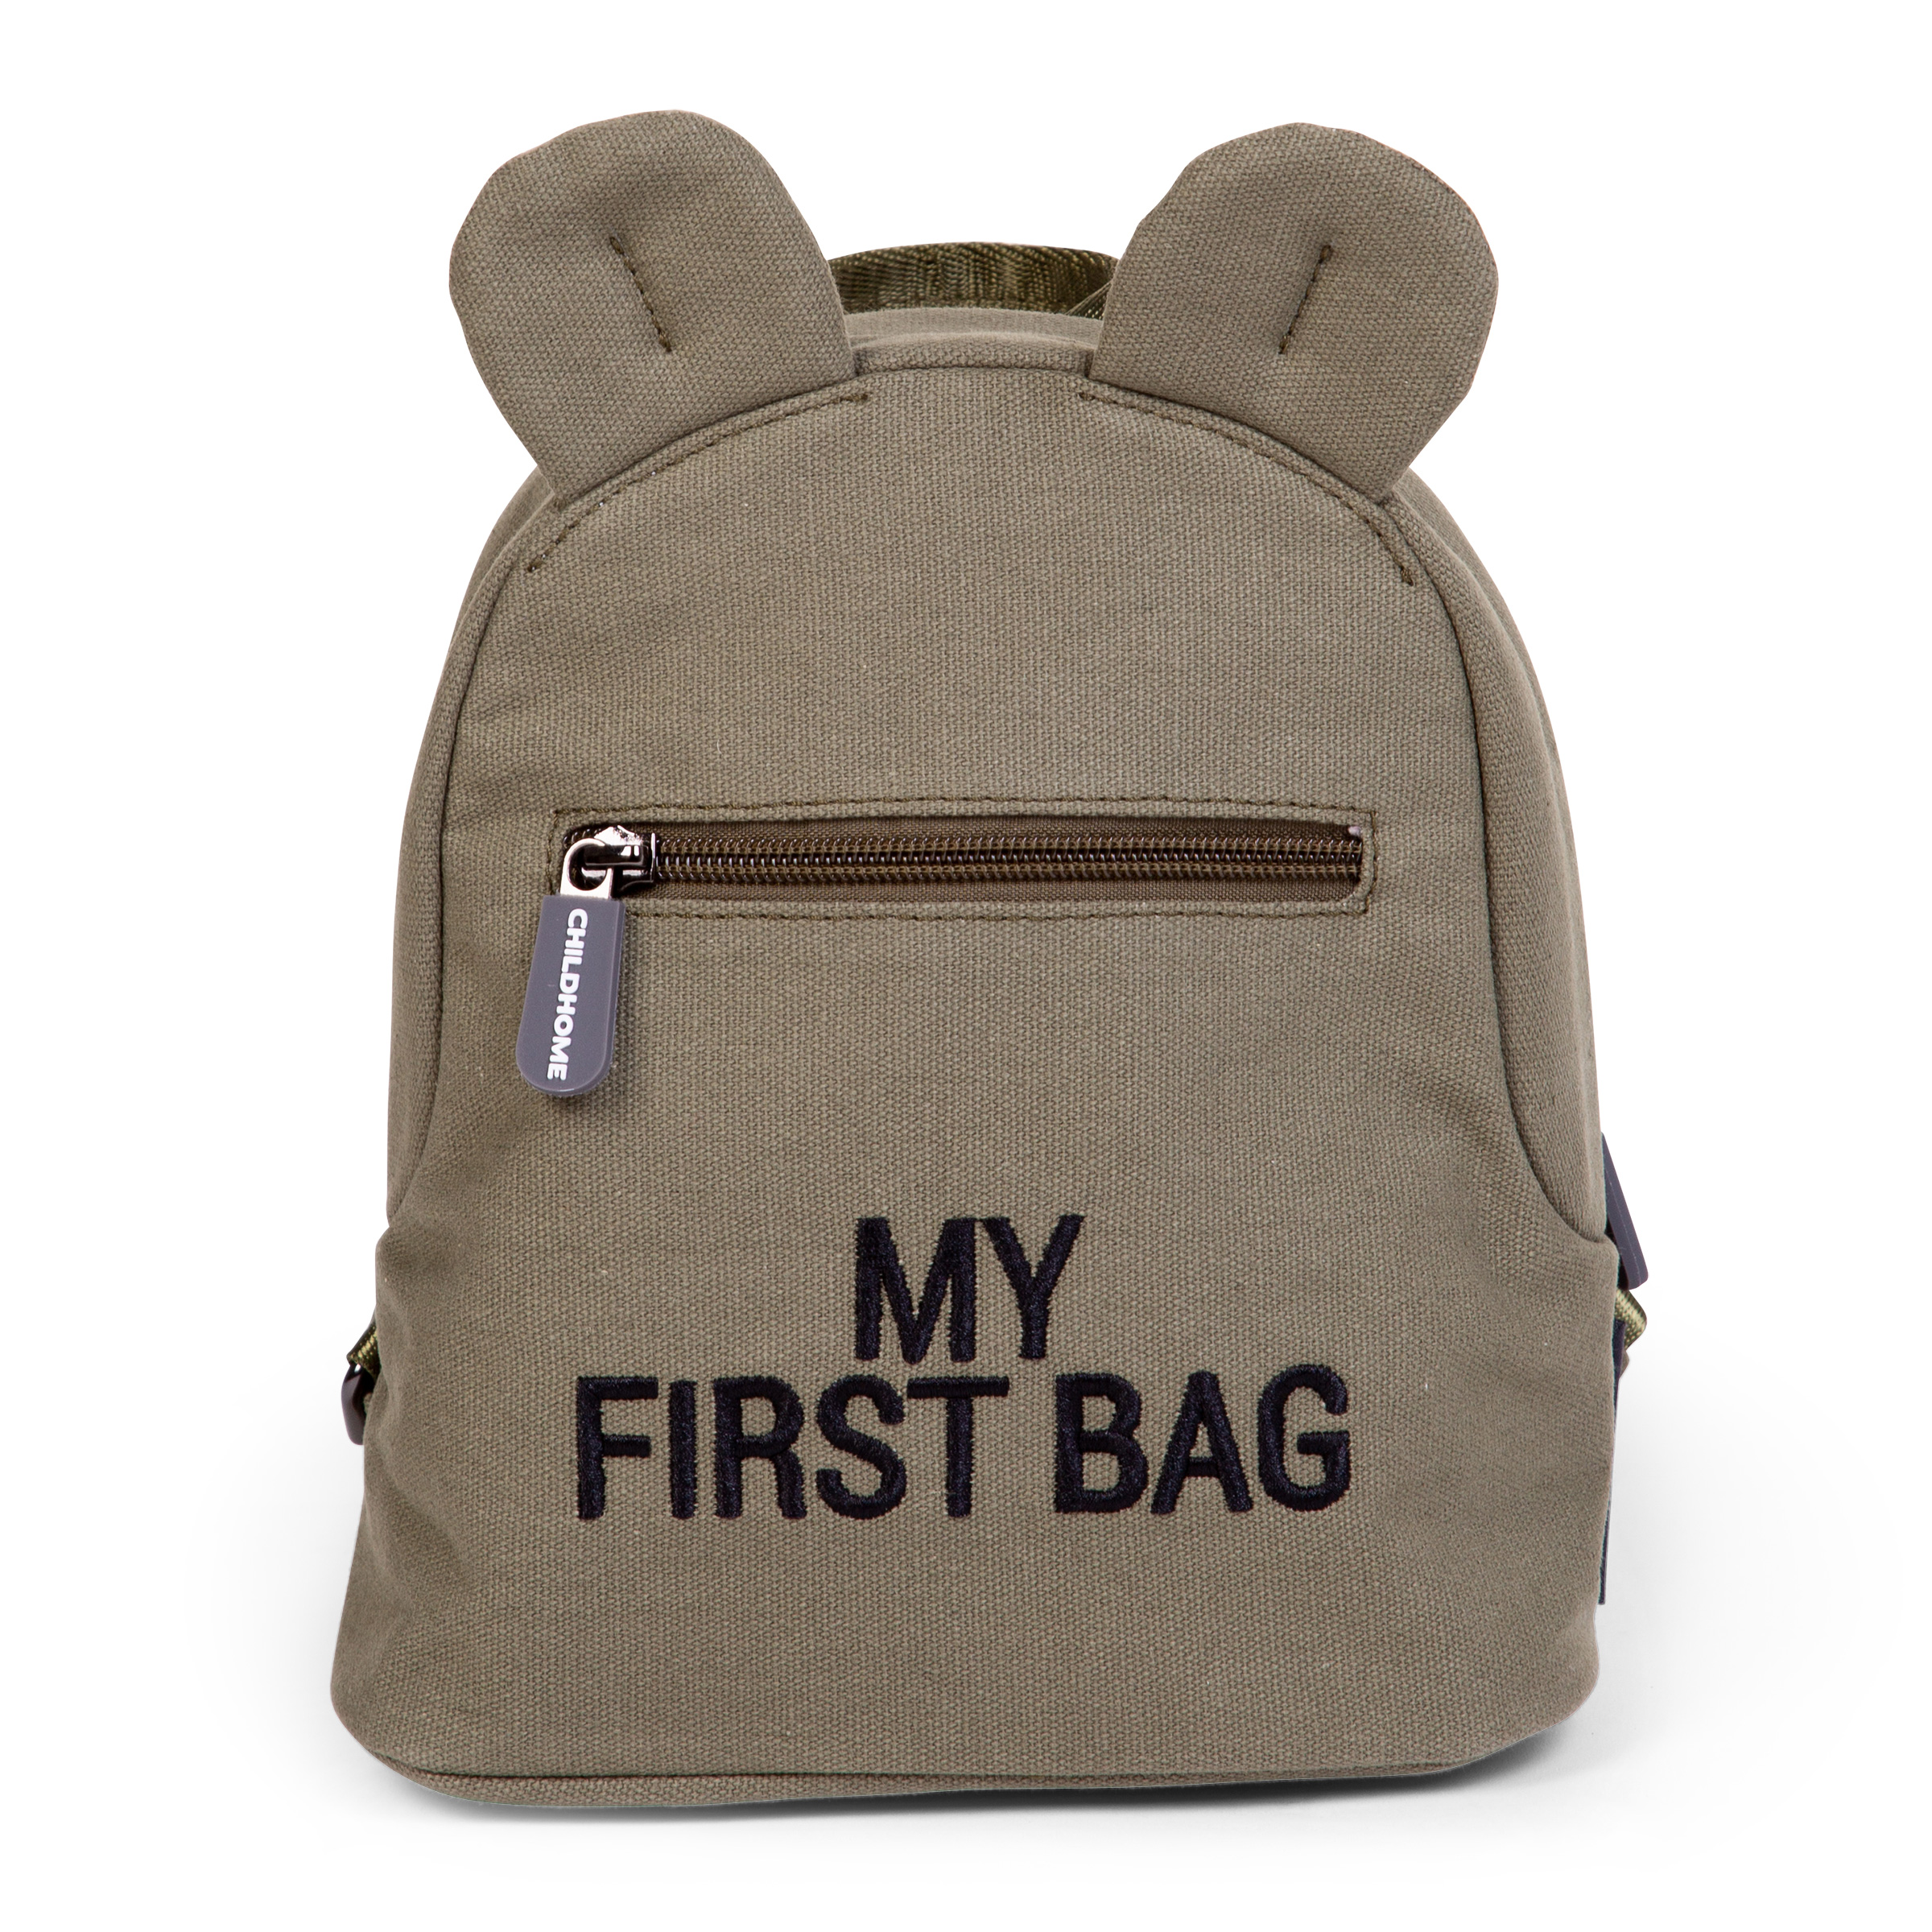 My First Bag Sac A Dos Pour Enfants - Toile - Kaki